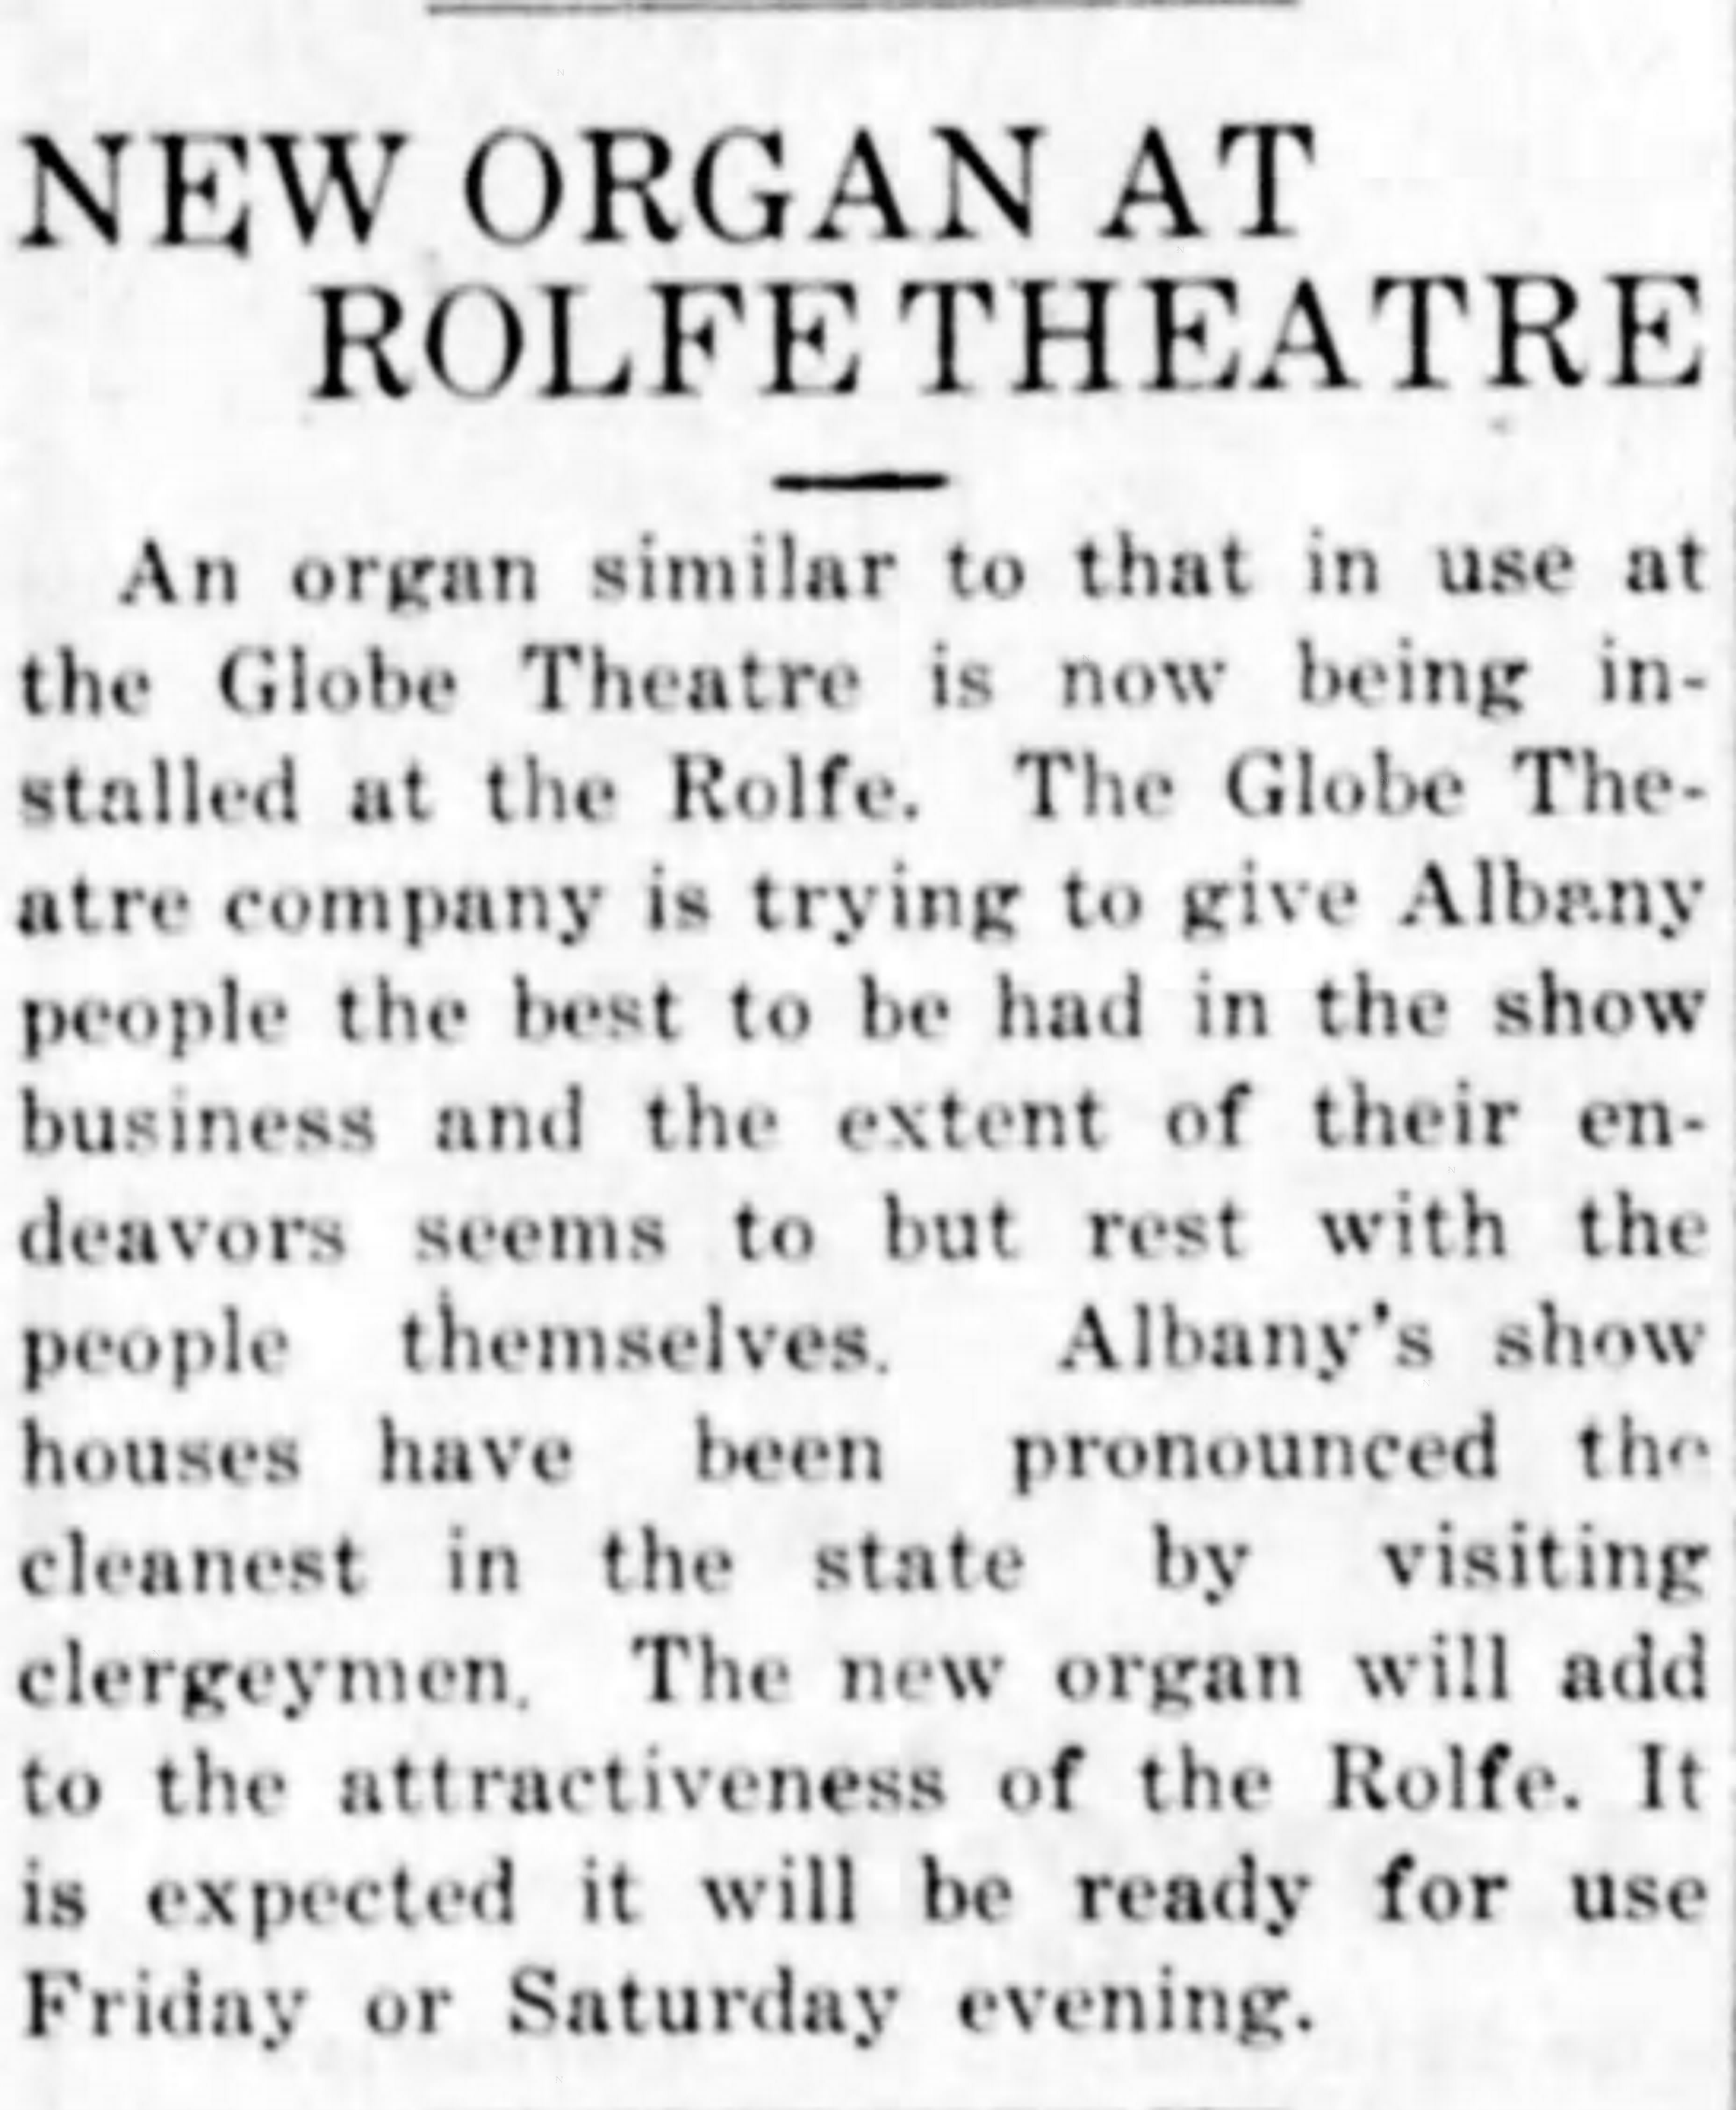 Rolfe theater news item, 1920